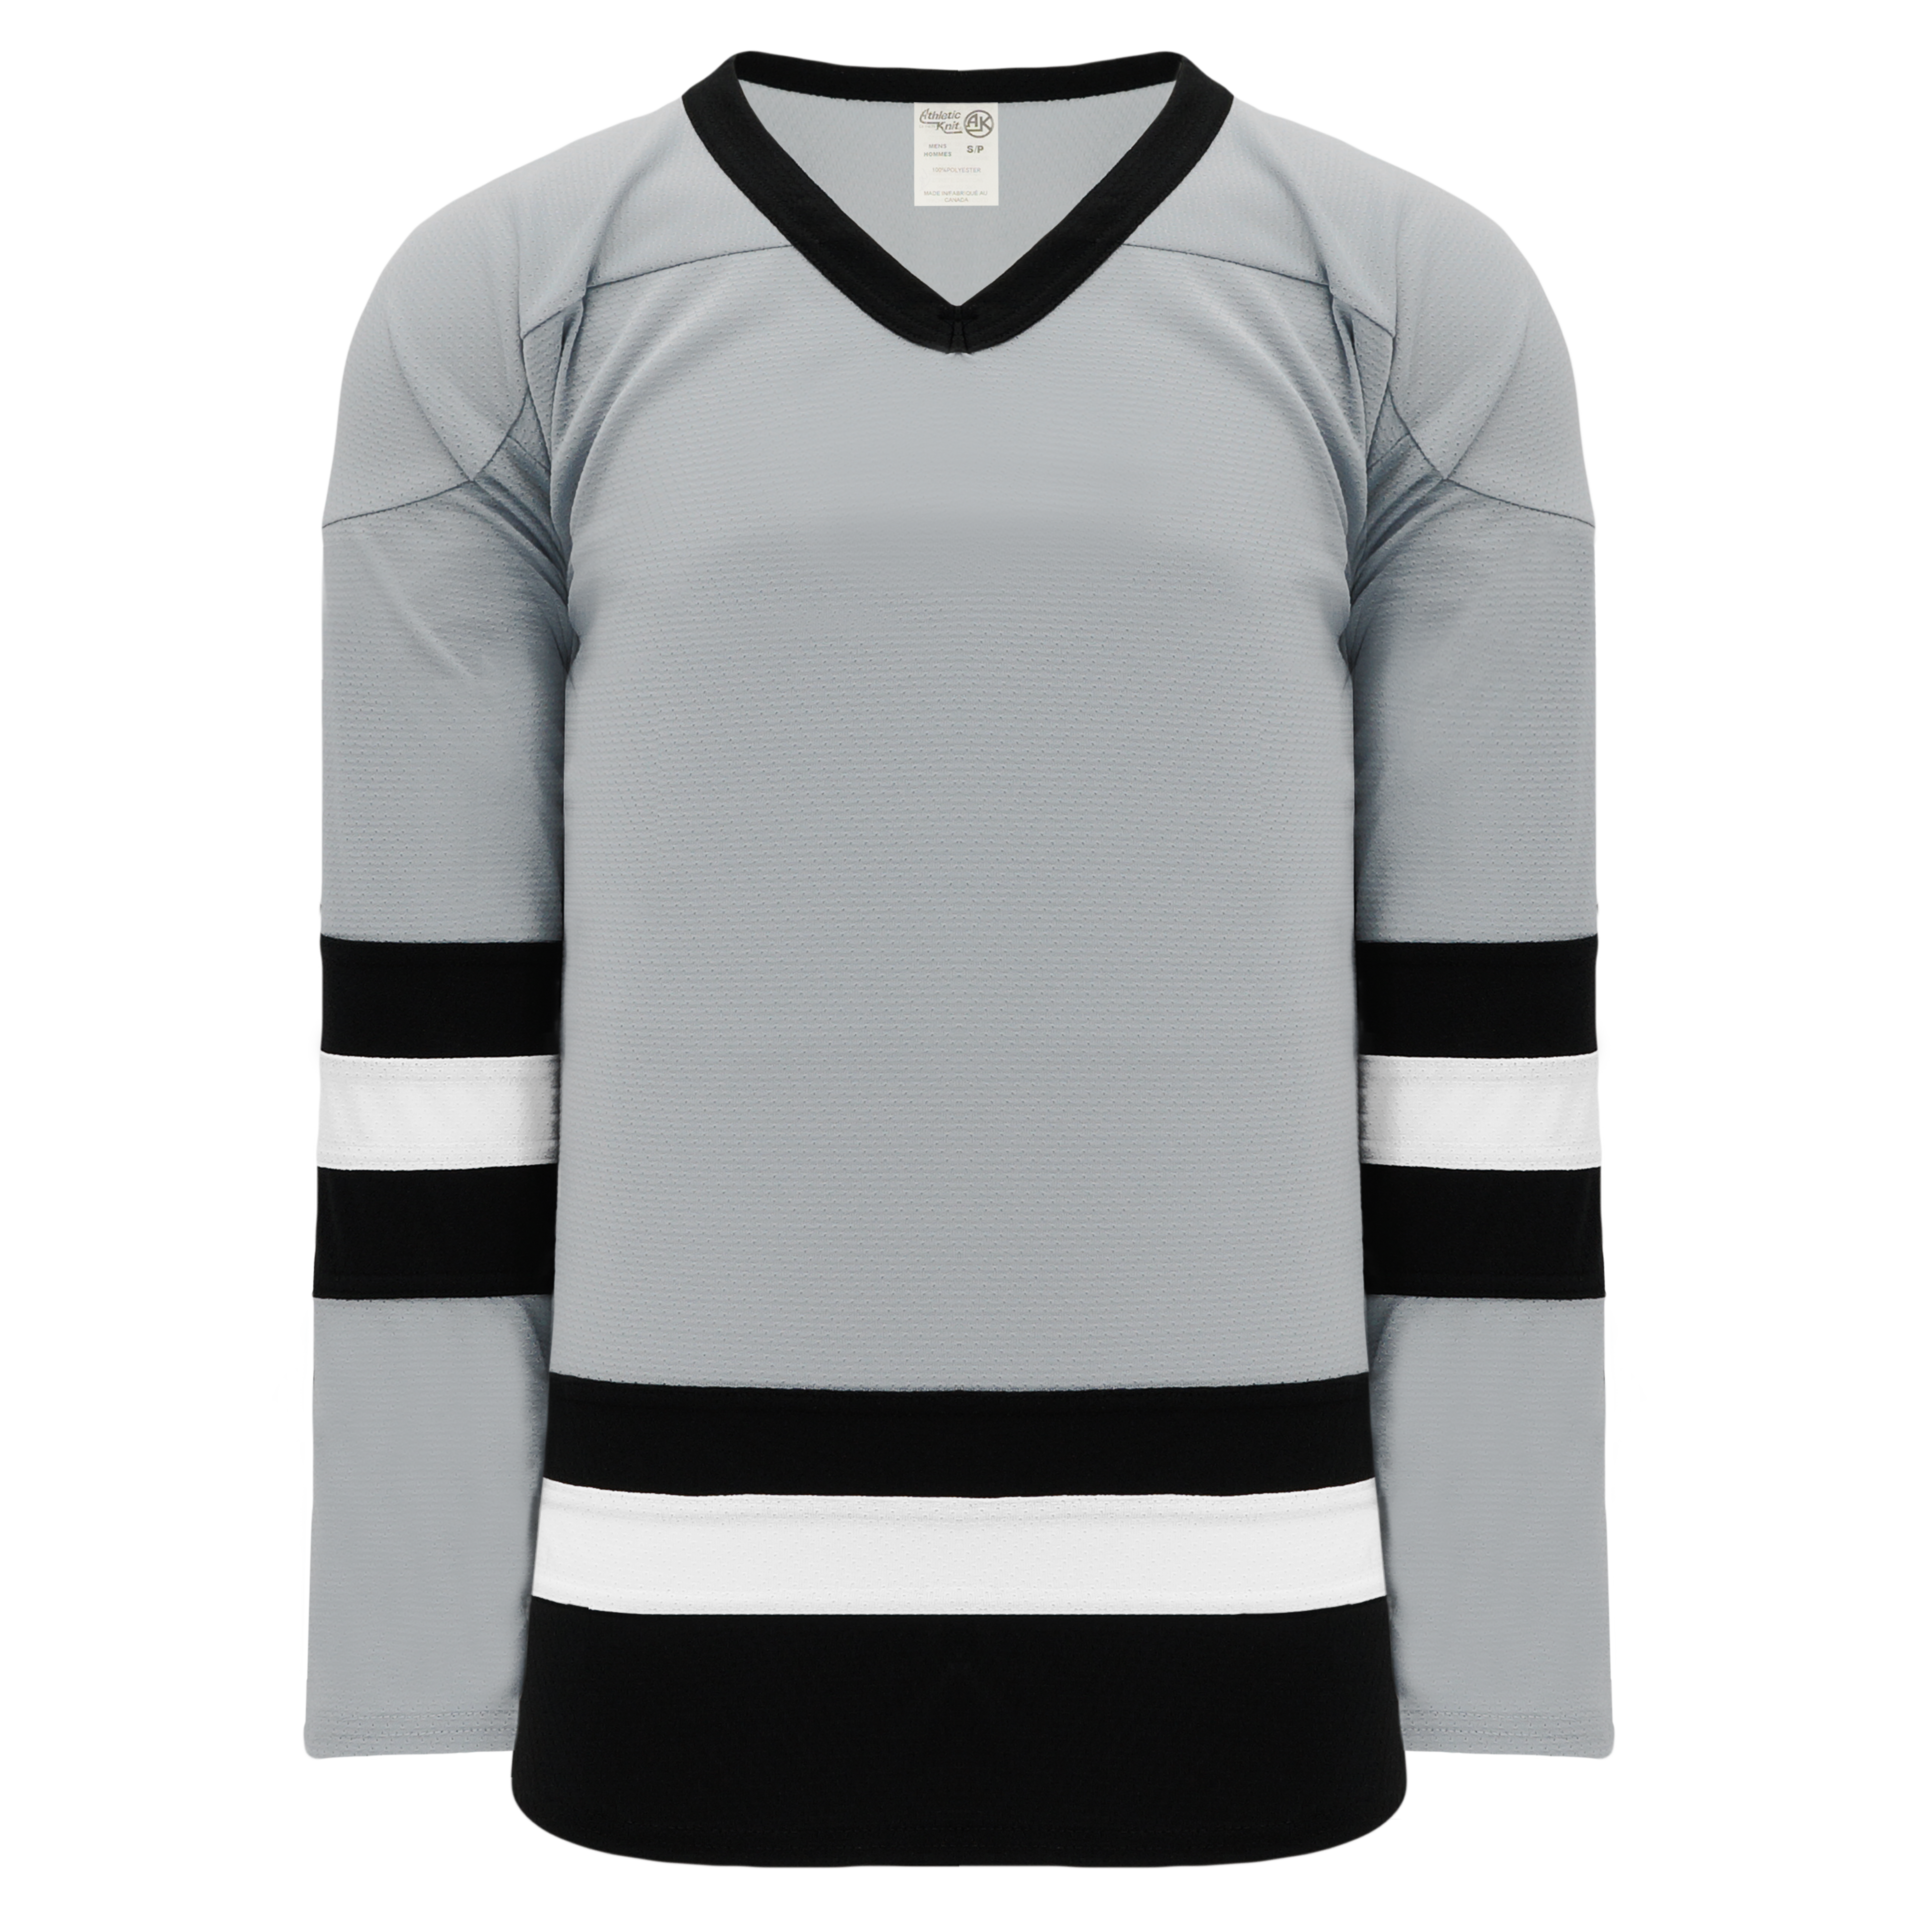 H6500-458 Teal/White/Orange League Style Blank Hockey Jerseys Youth Large